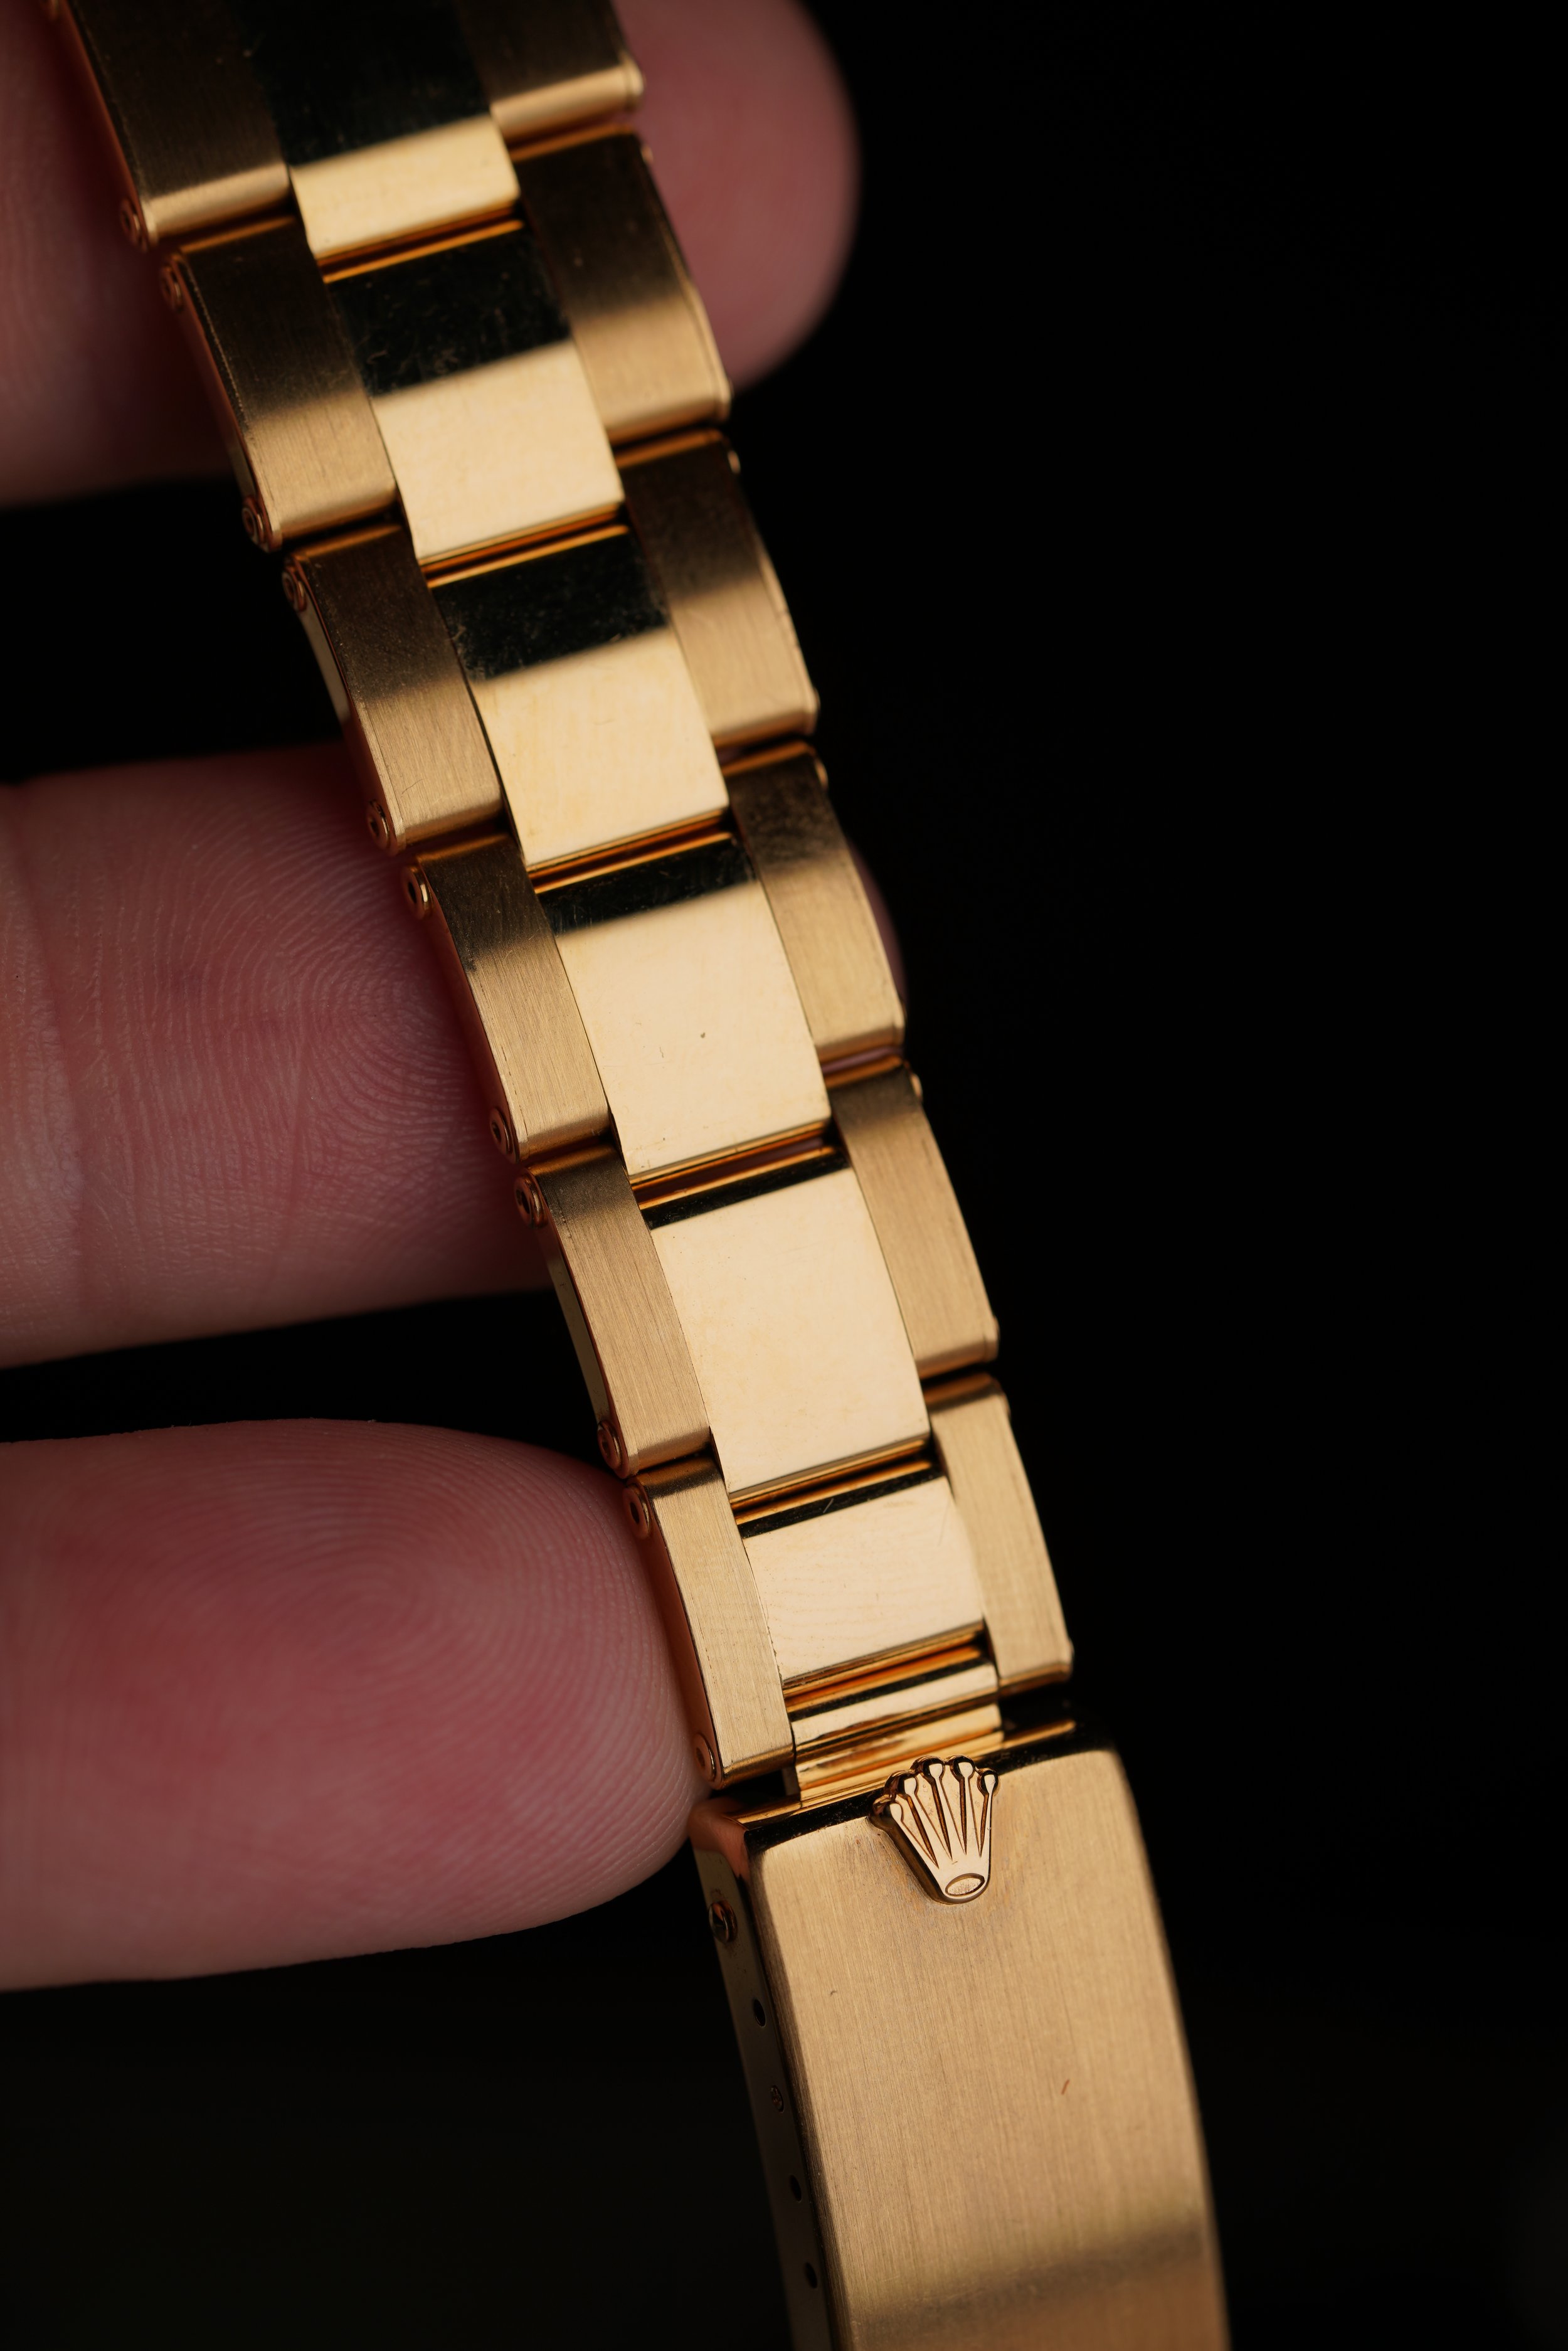 19mm NOS Rolex 18k 7205 Yellow Gold Rivet Bracelet 7.5 inches